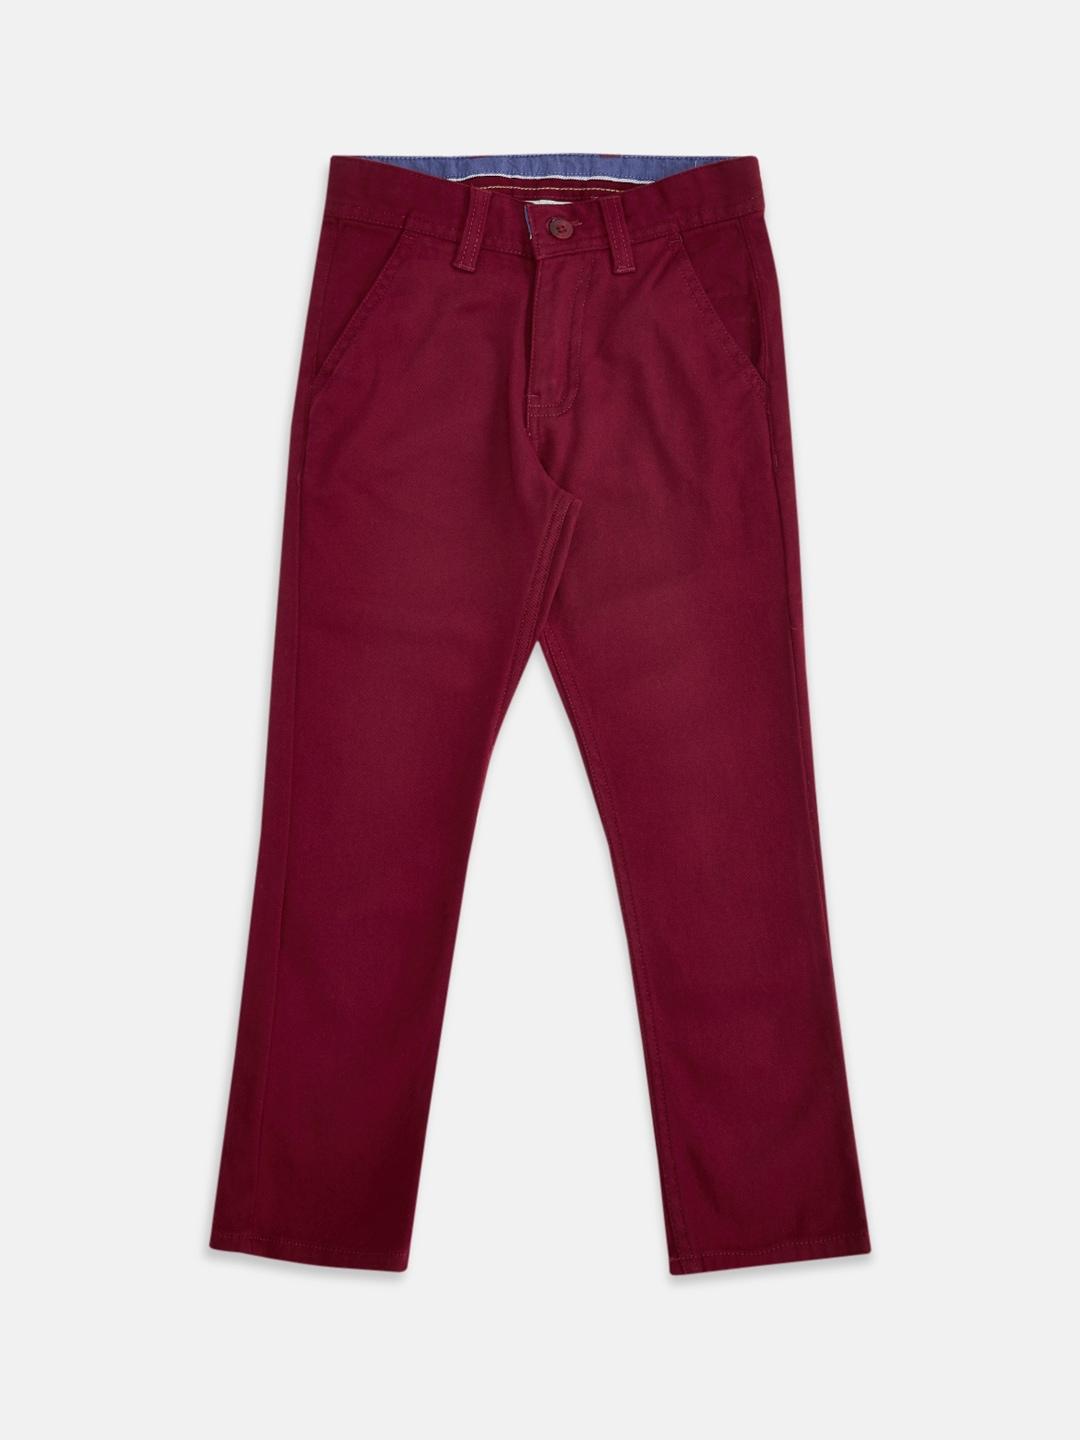 Pantaloons Junior Boys Maroon Solid Cotton Chinos Trouser